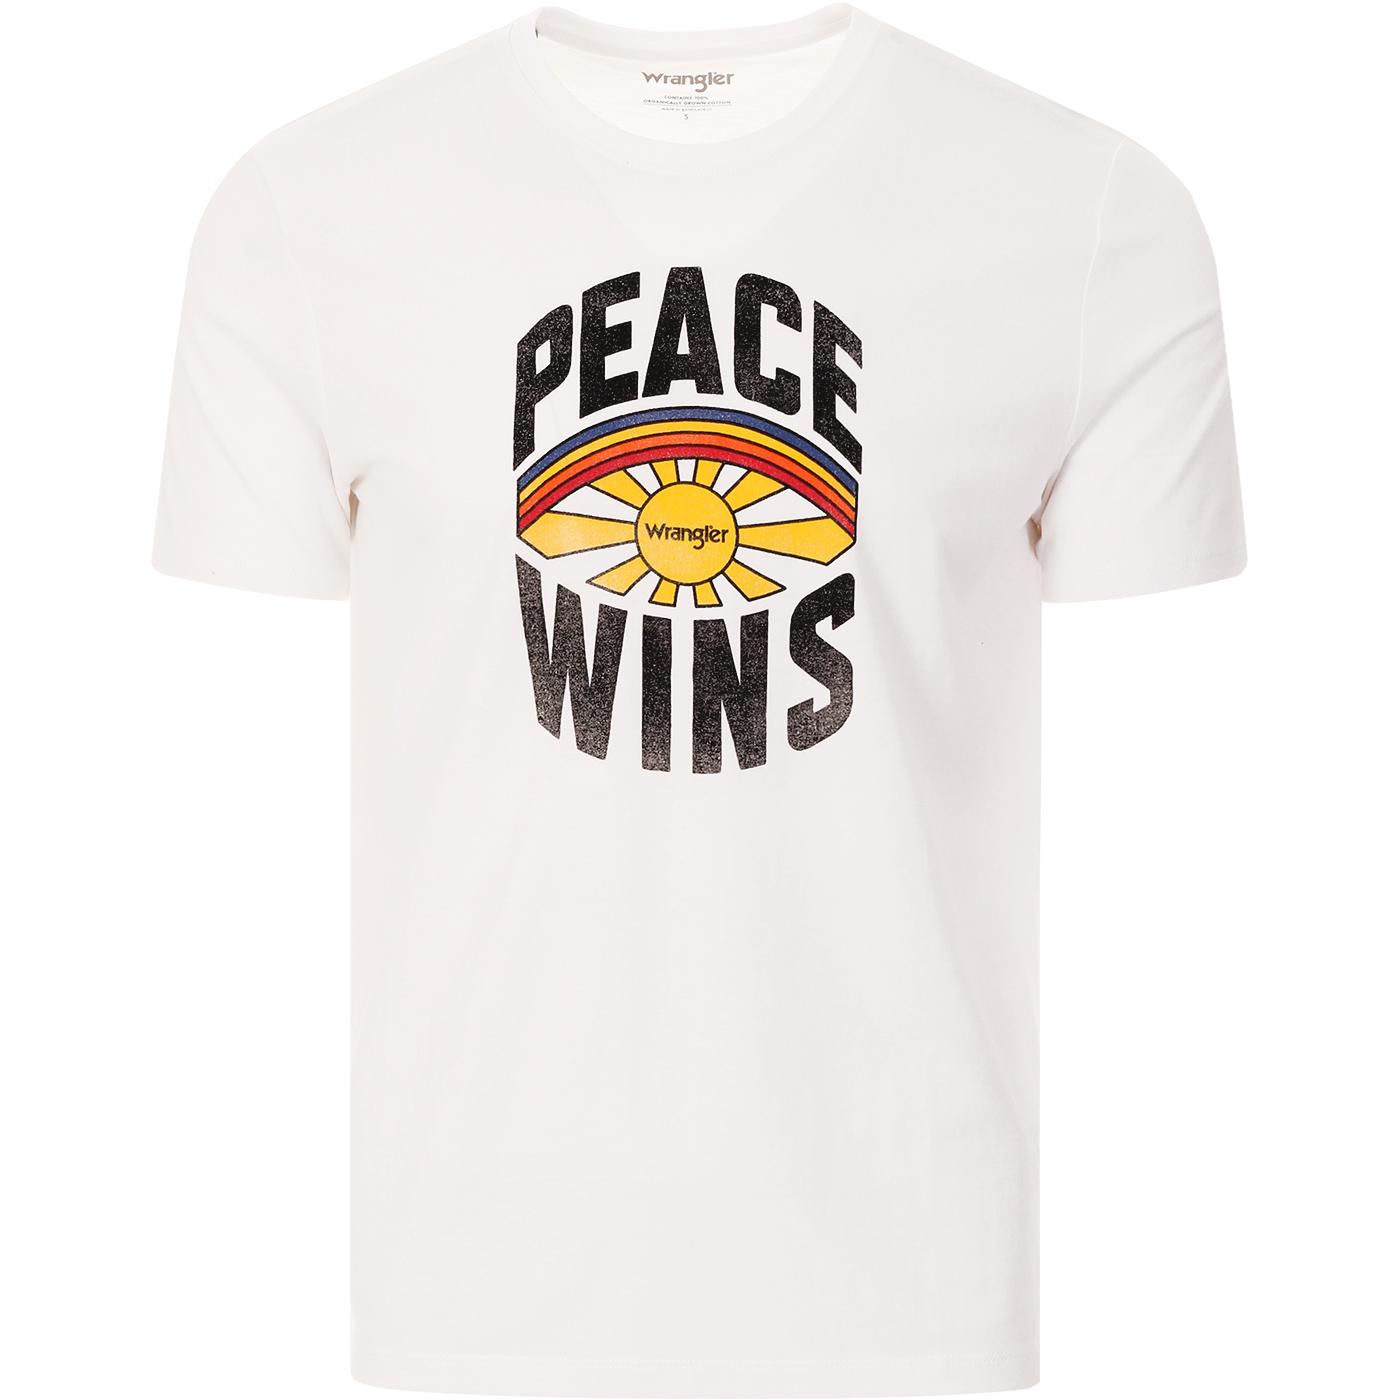 WRANGLER Peace Wins Retro 70s Sunburst Tee